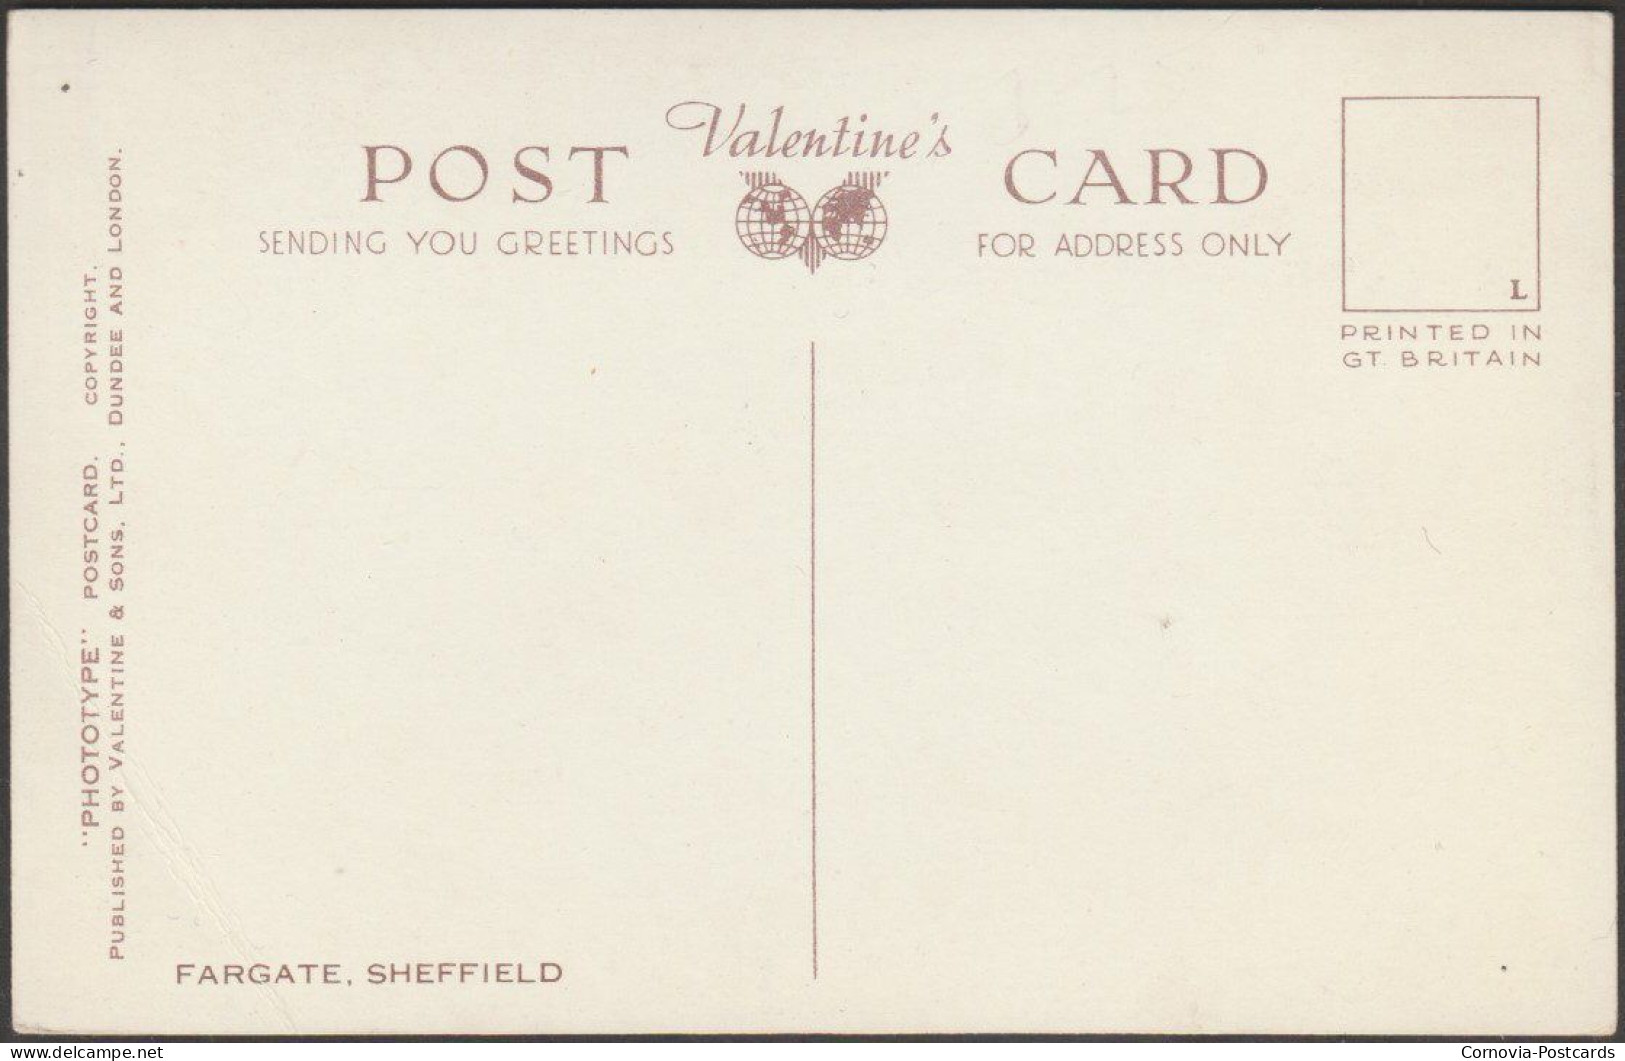 Fargate, Sheffield, Yorkshire, C.1950s - Valentine's Postcard - Sheffield